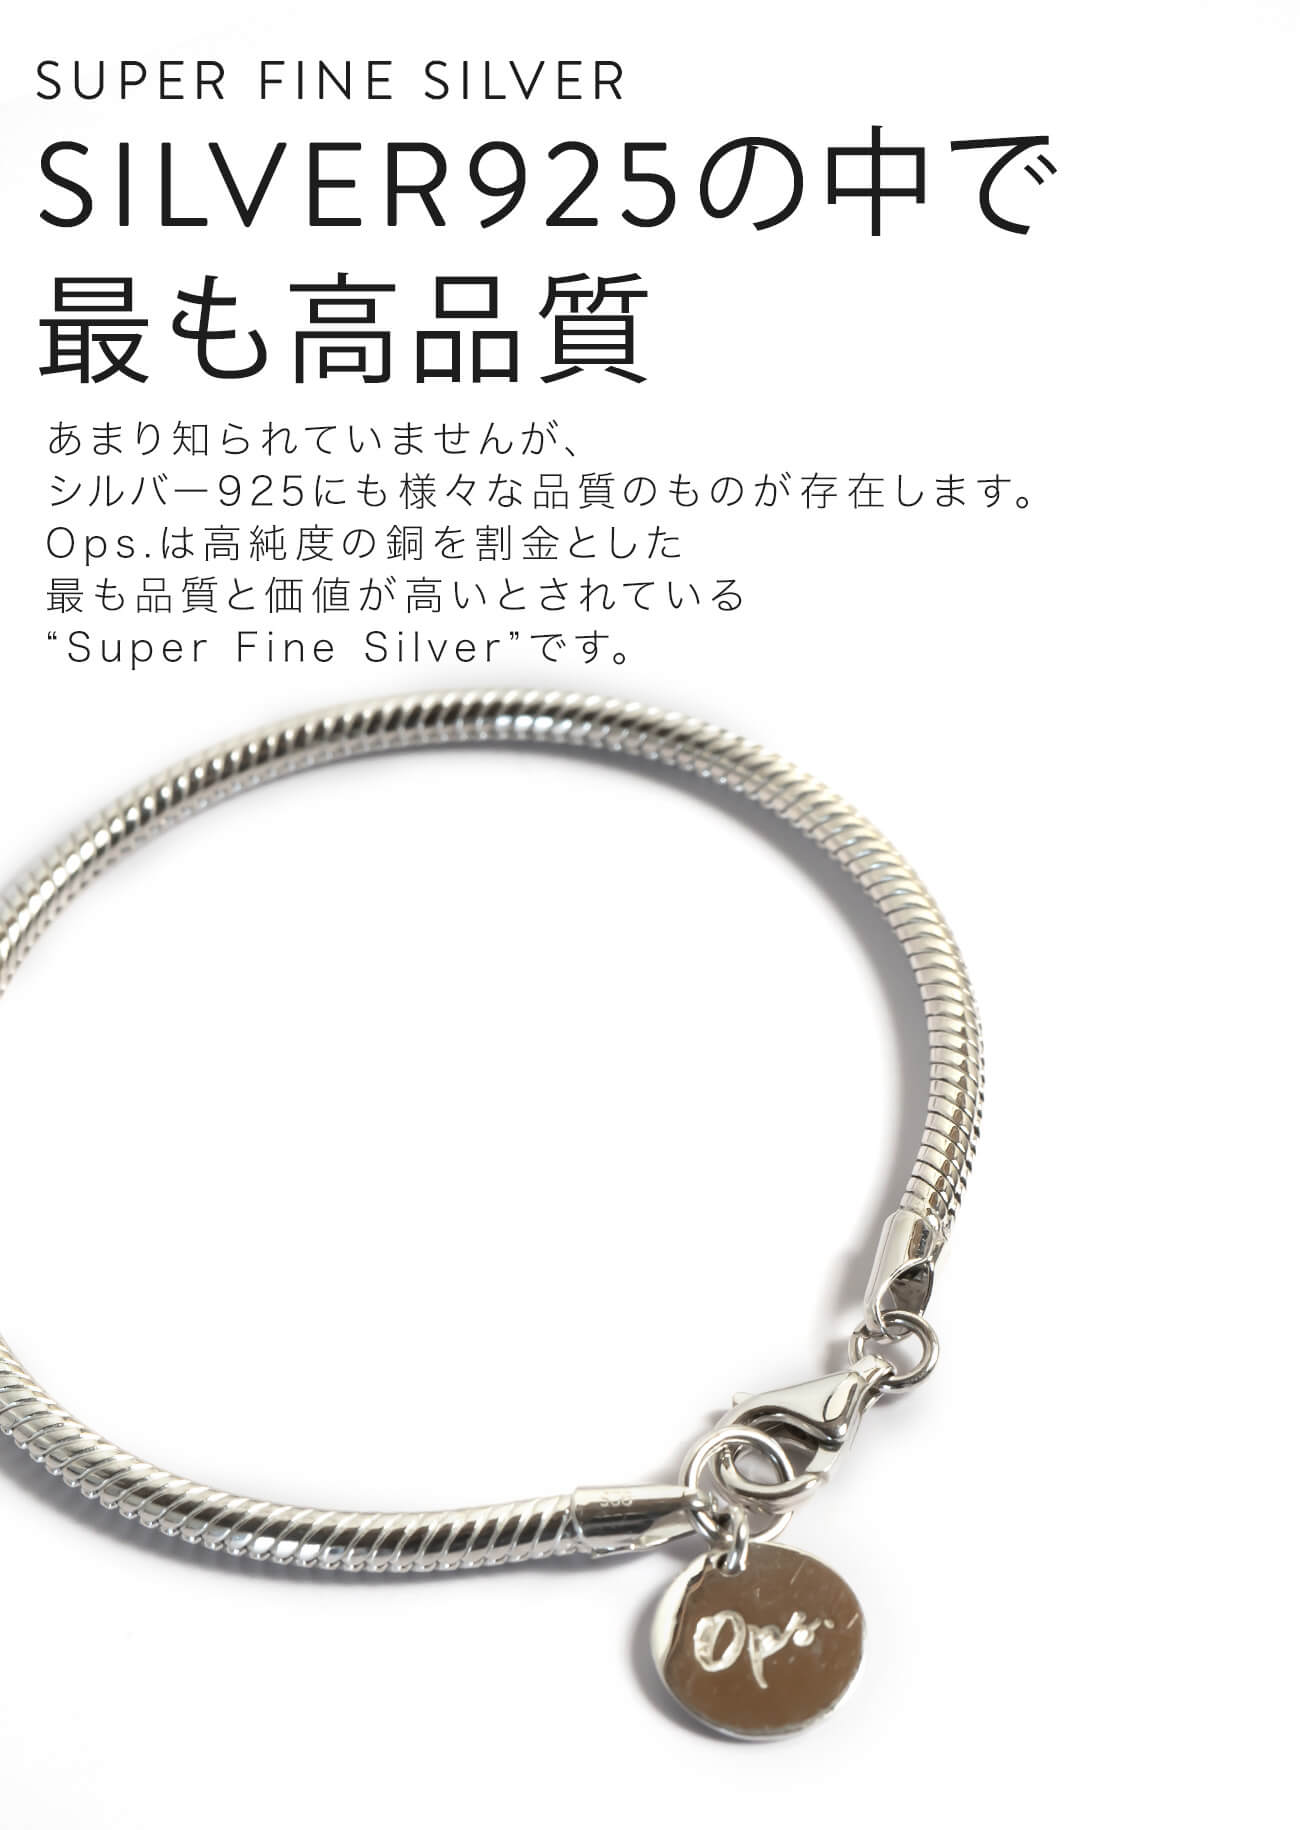 Silver925 Thick Snake Chain Bracelet VENEC BULKY -べネックバルキー